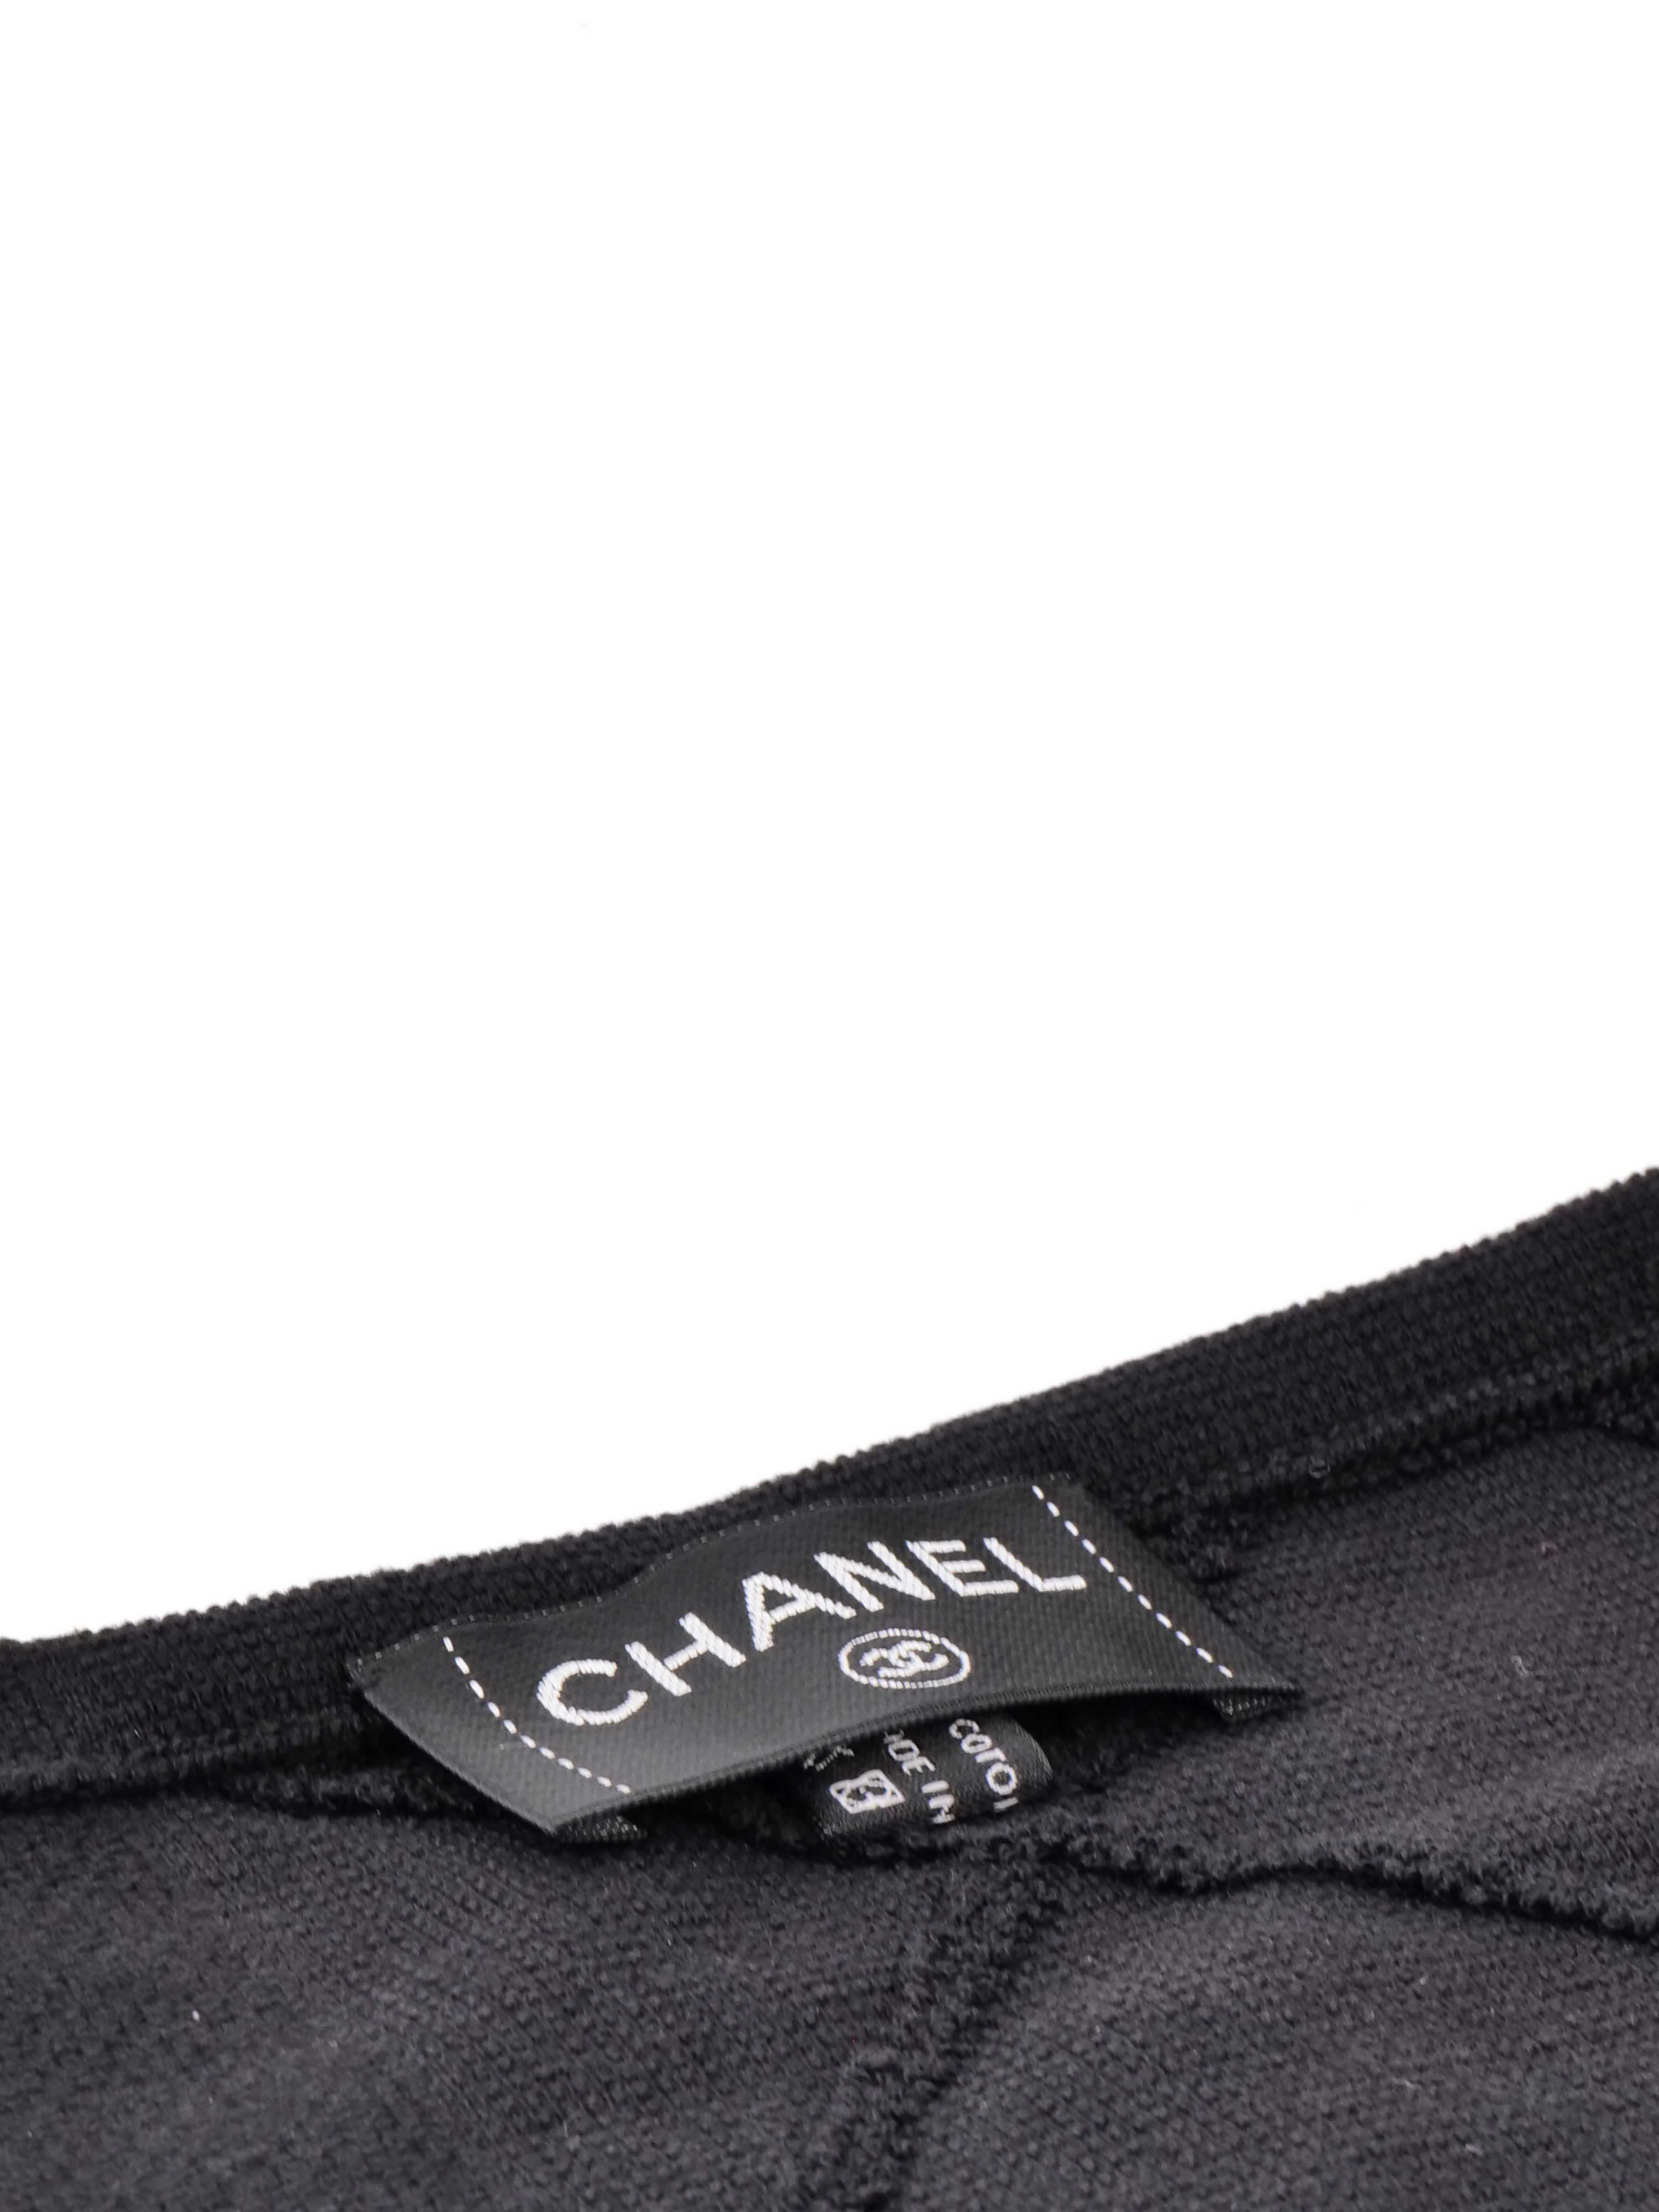 Chanel Black Beach Towel.